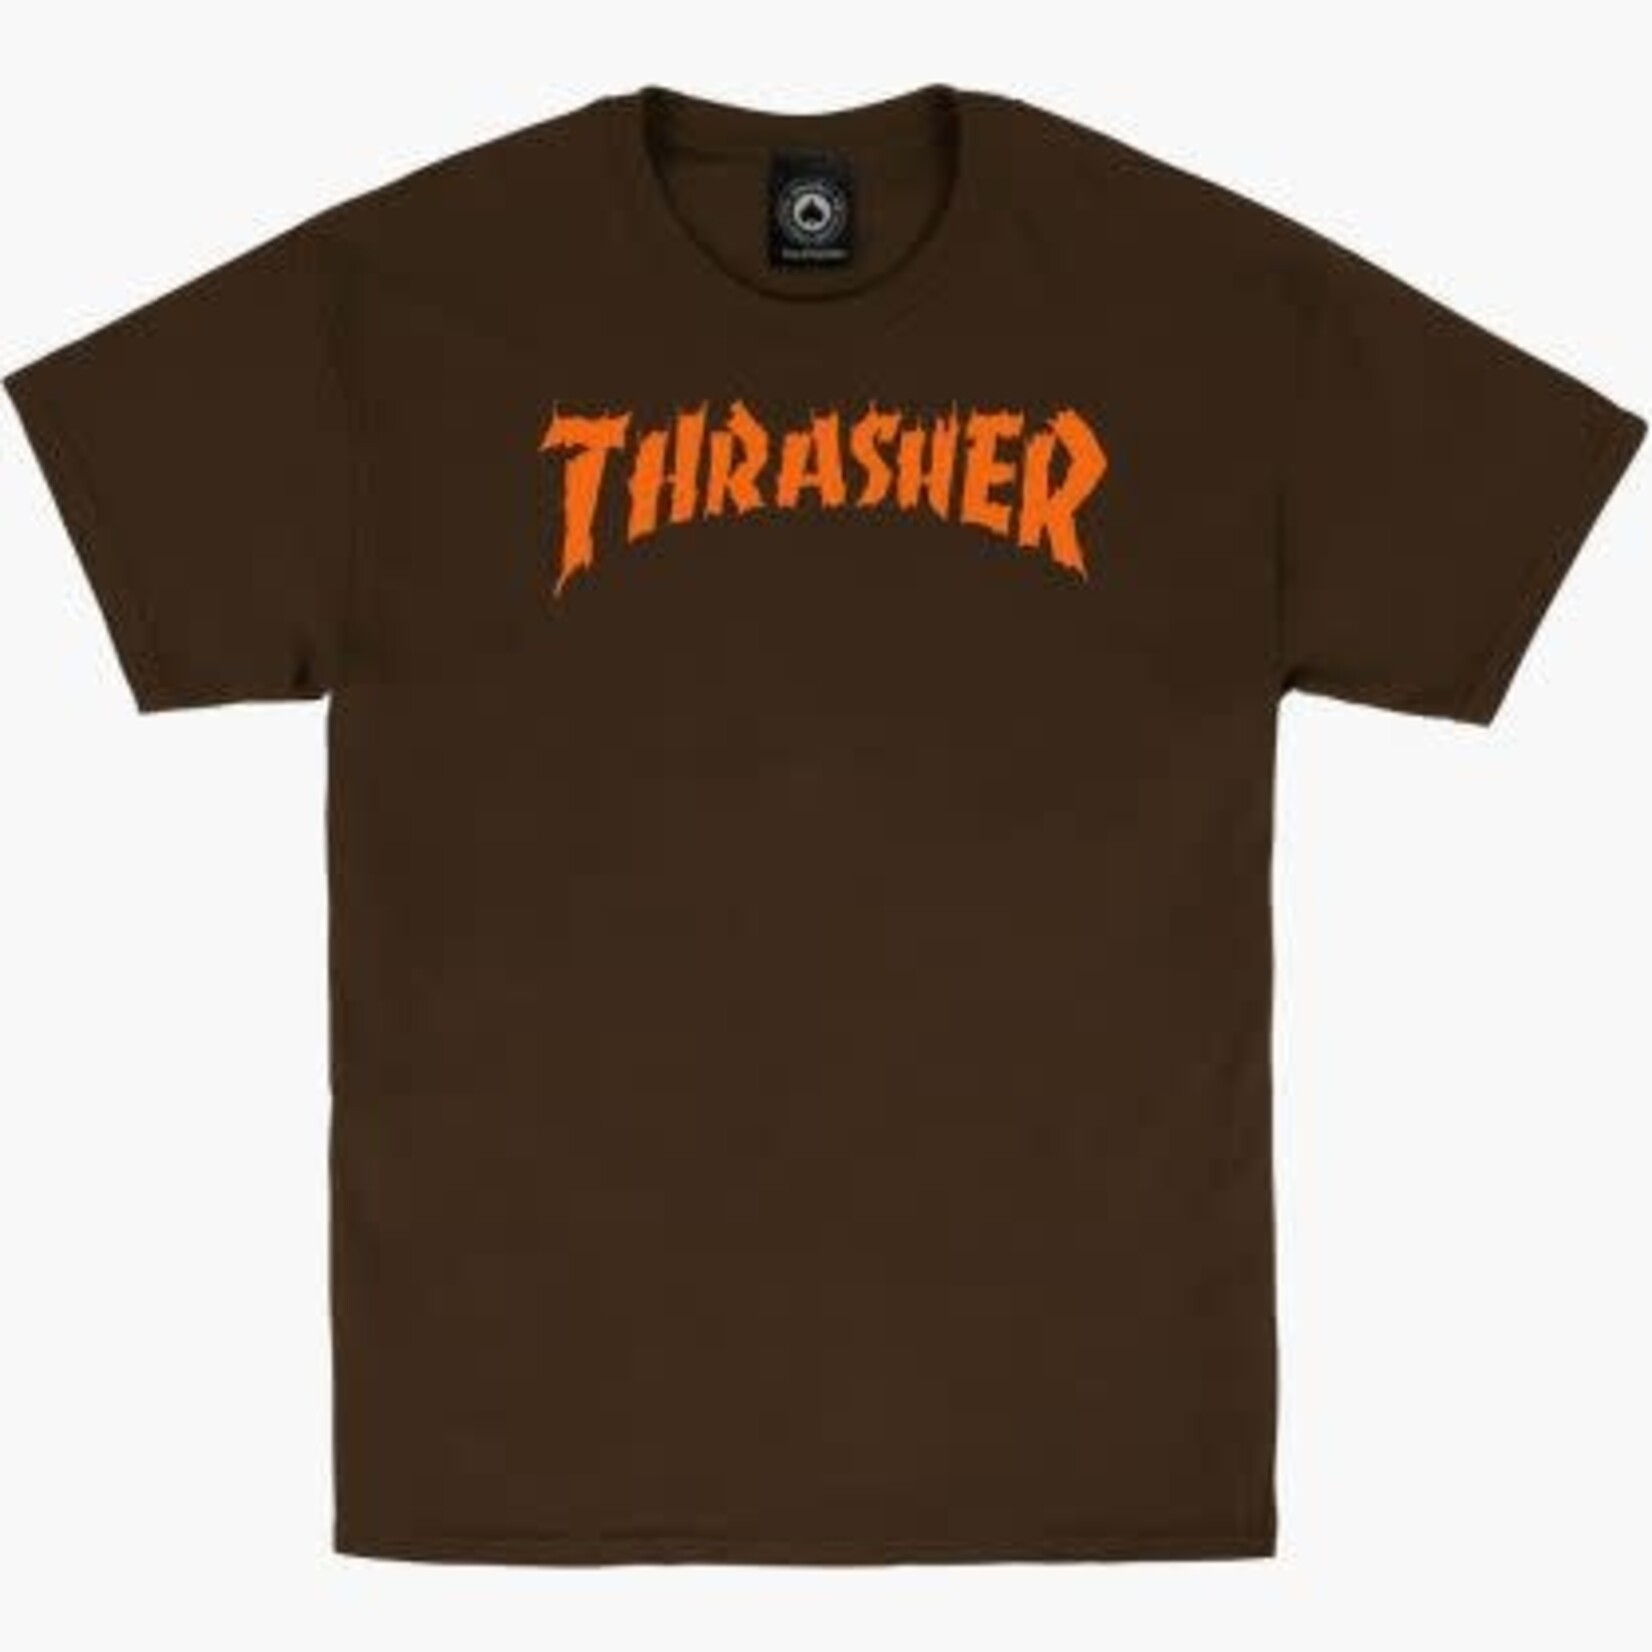 Thrasher THRASHER BURN IT DOWN - T-shirt - Dark Chocolate